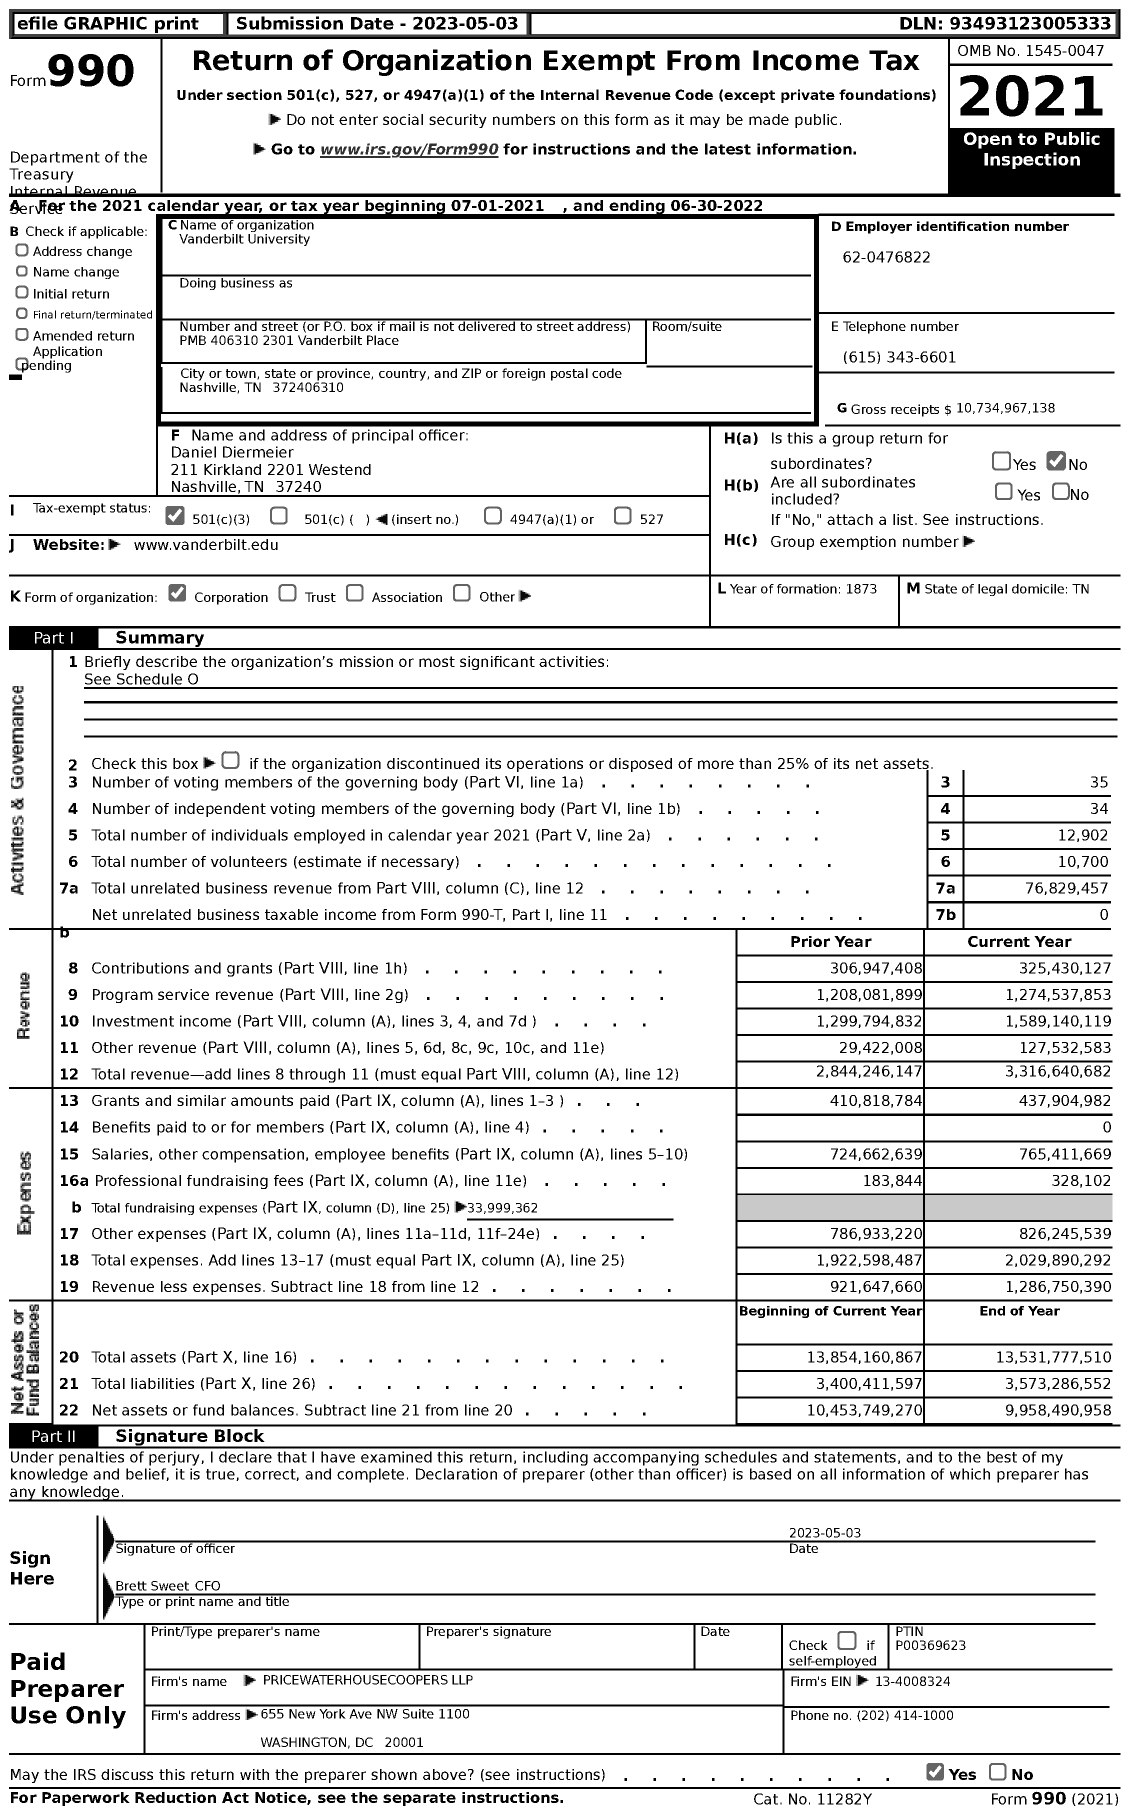 Image of first page of 2021 Form 990 for Vanderbilt University